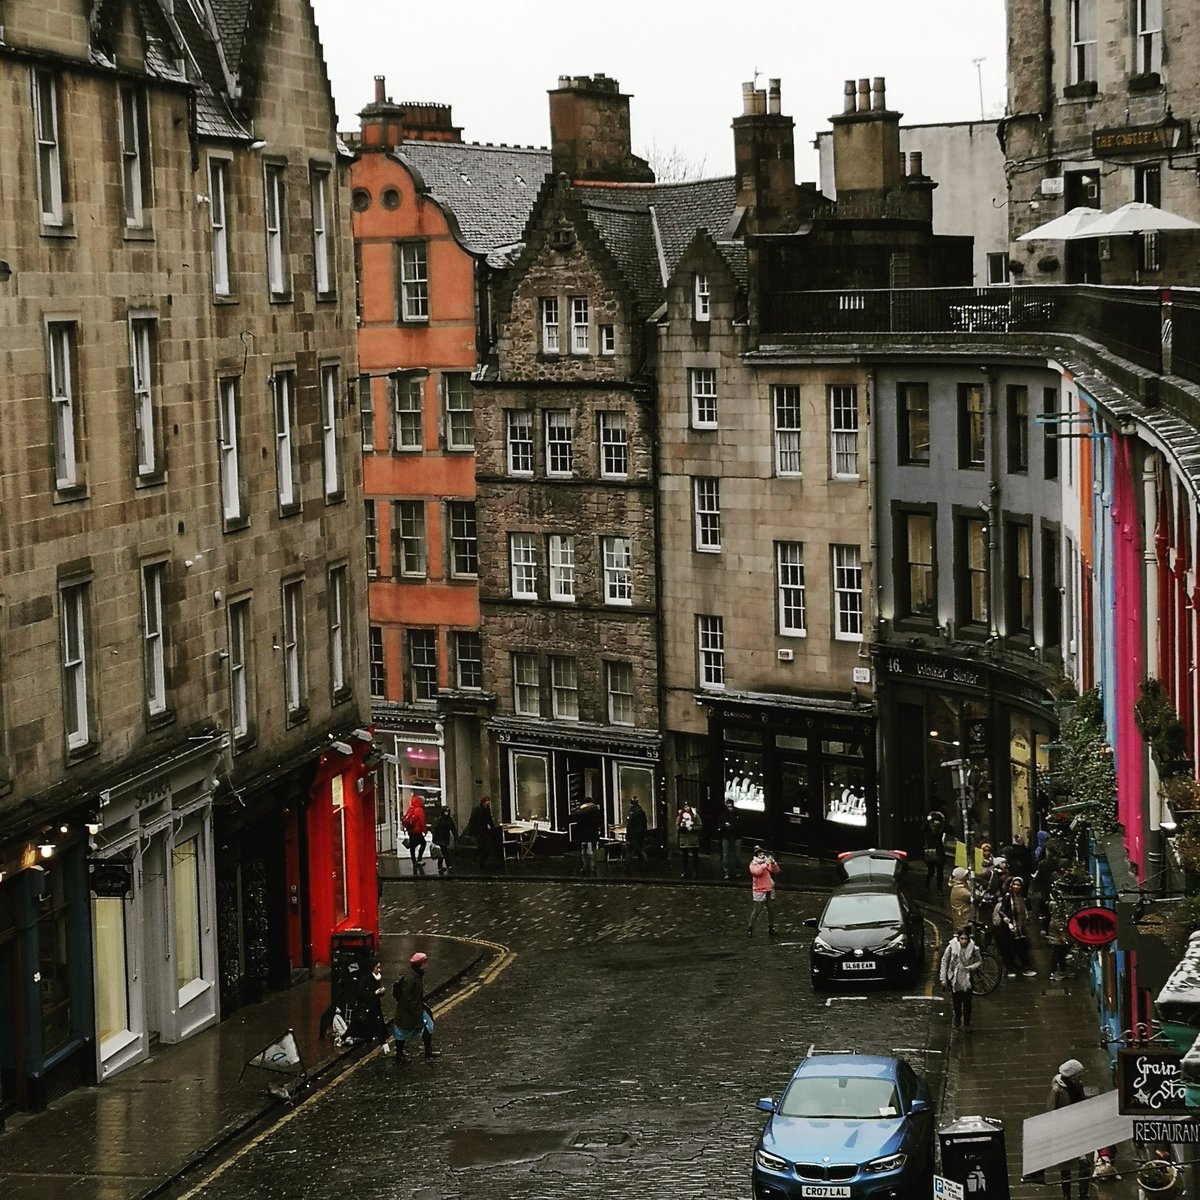 Awww Victoria Street, Edinburgh 👌
#victoriastreet #edinburgh #oldtownedinburgh